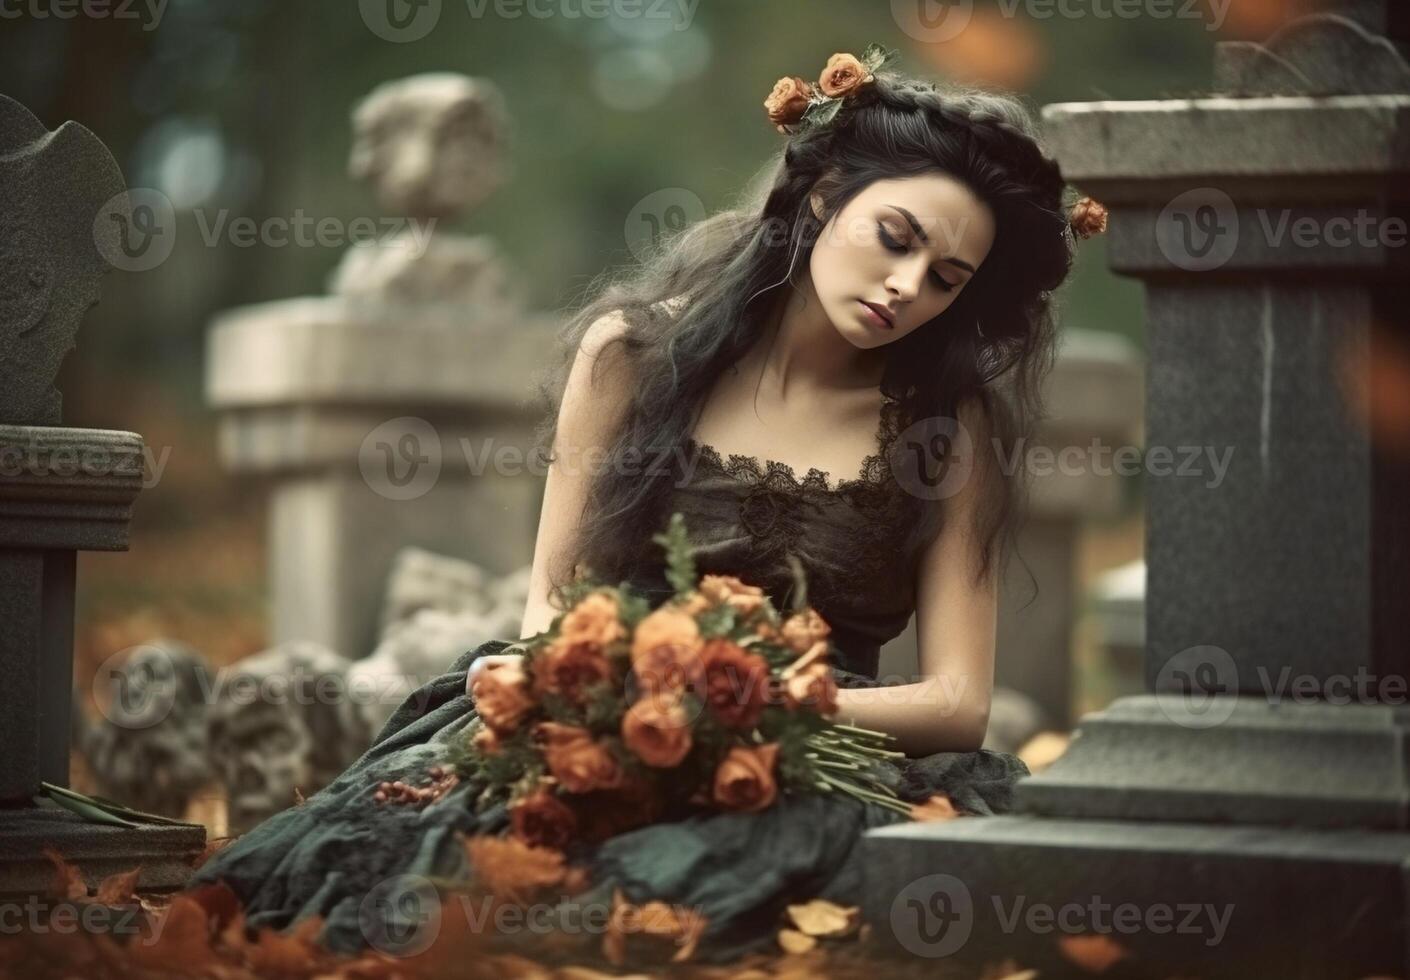 ai generativ ledsen kvinna i de kyrkogård innehav bukett av ro i henne hand foto